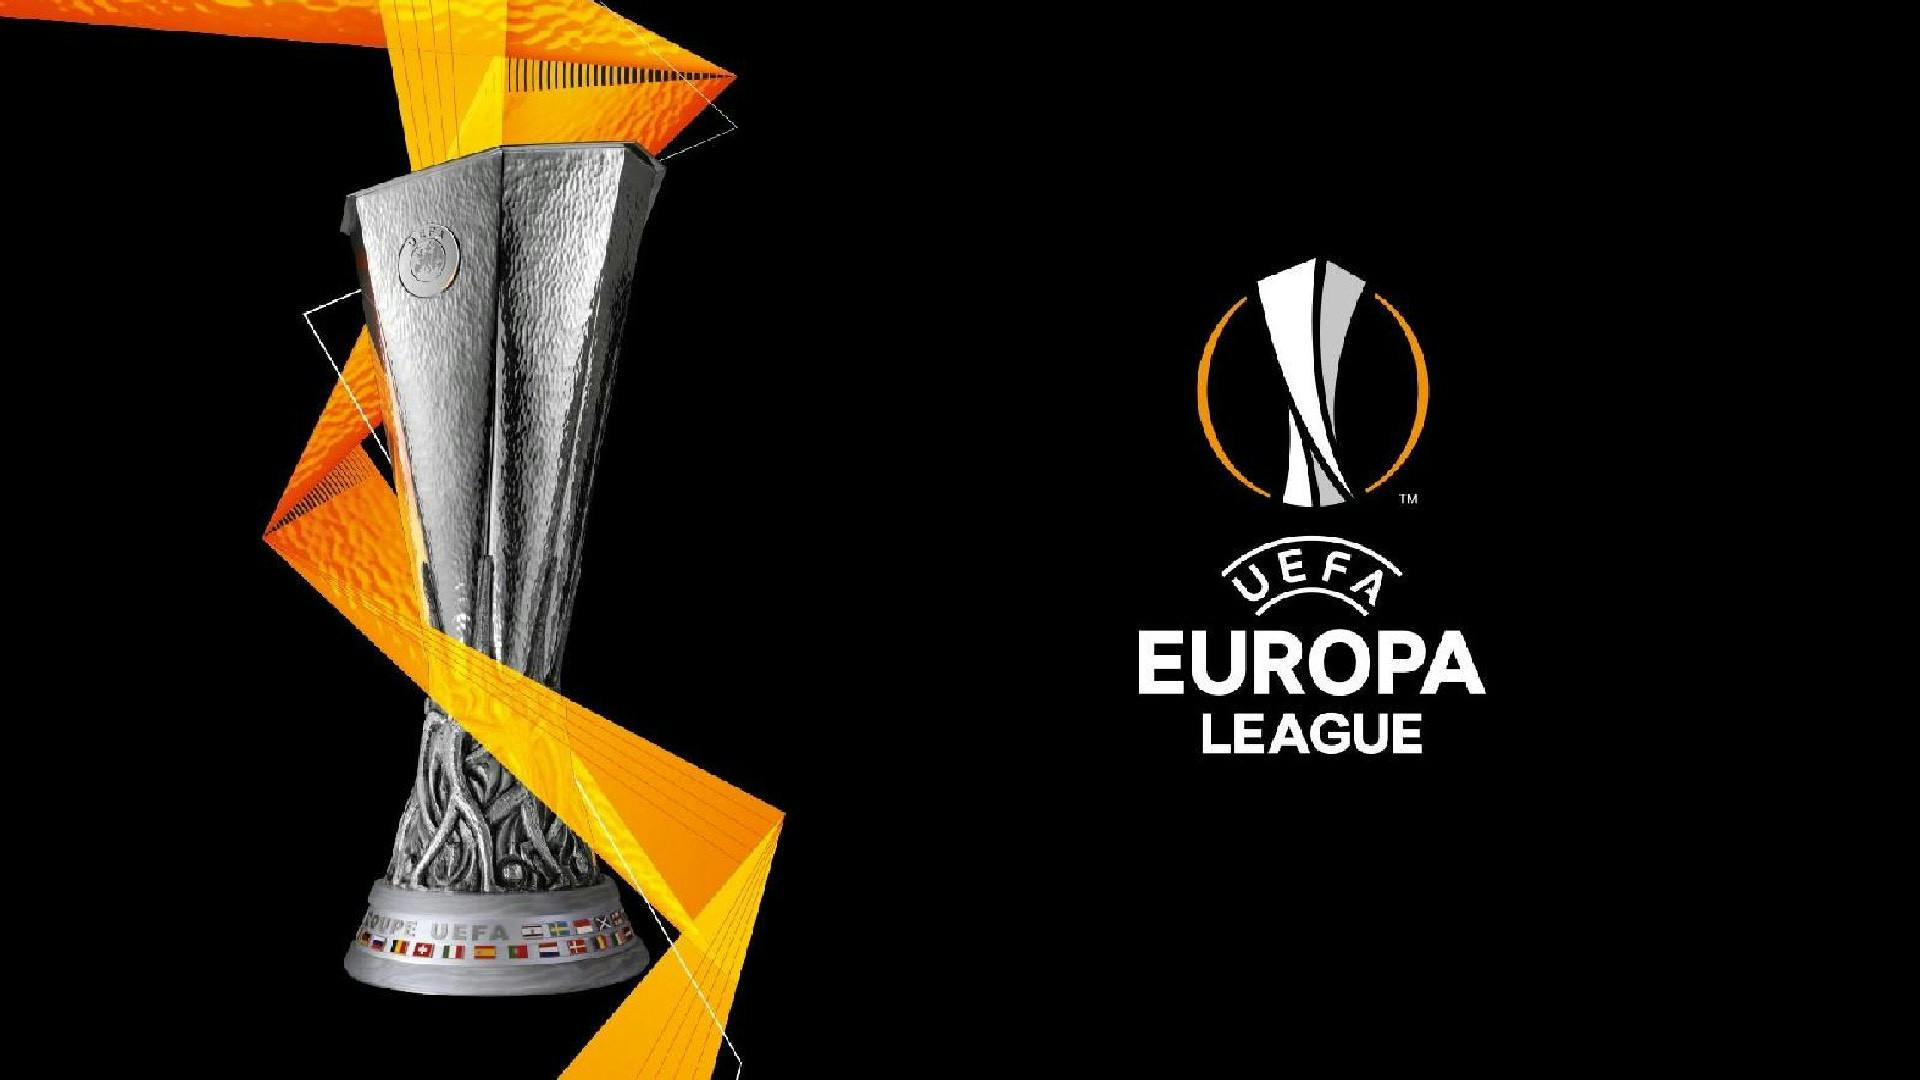 europa-league-coppa-e-logo